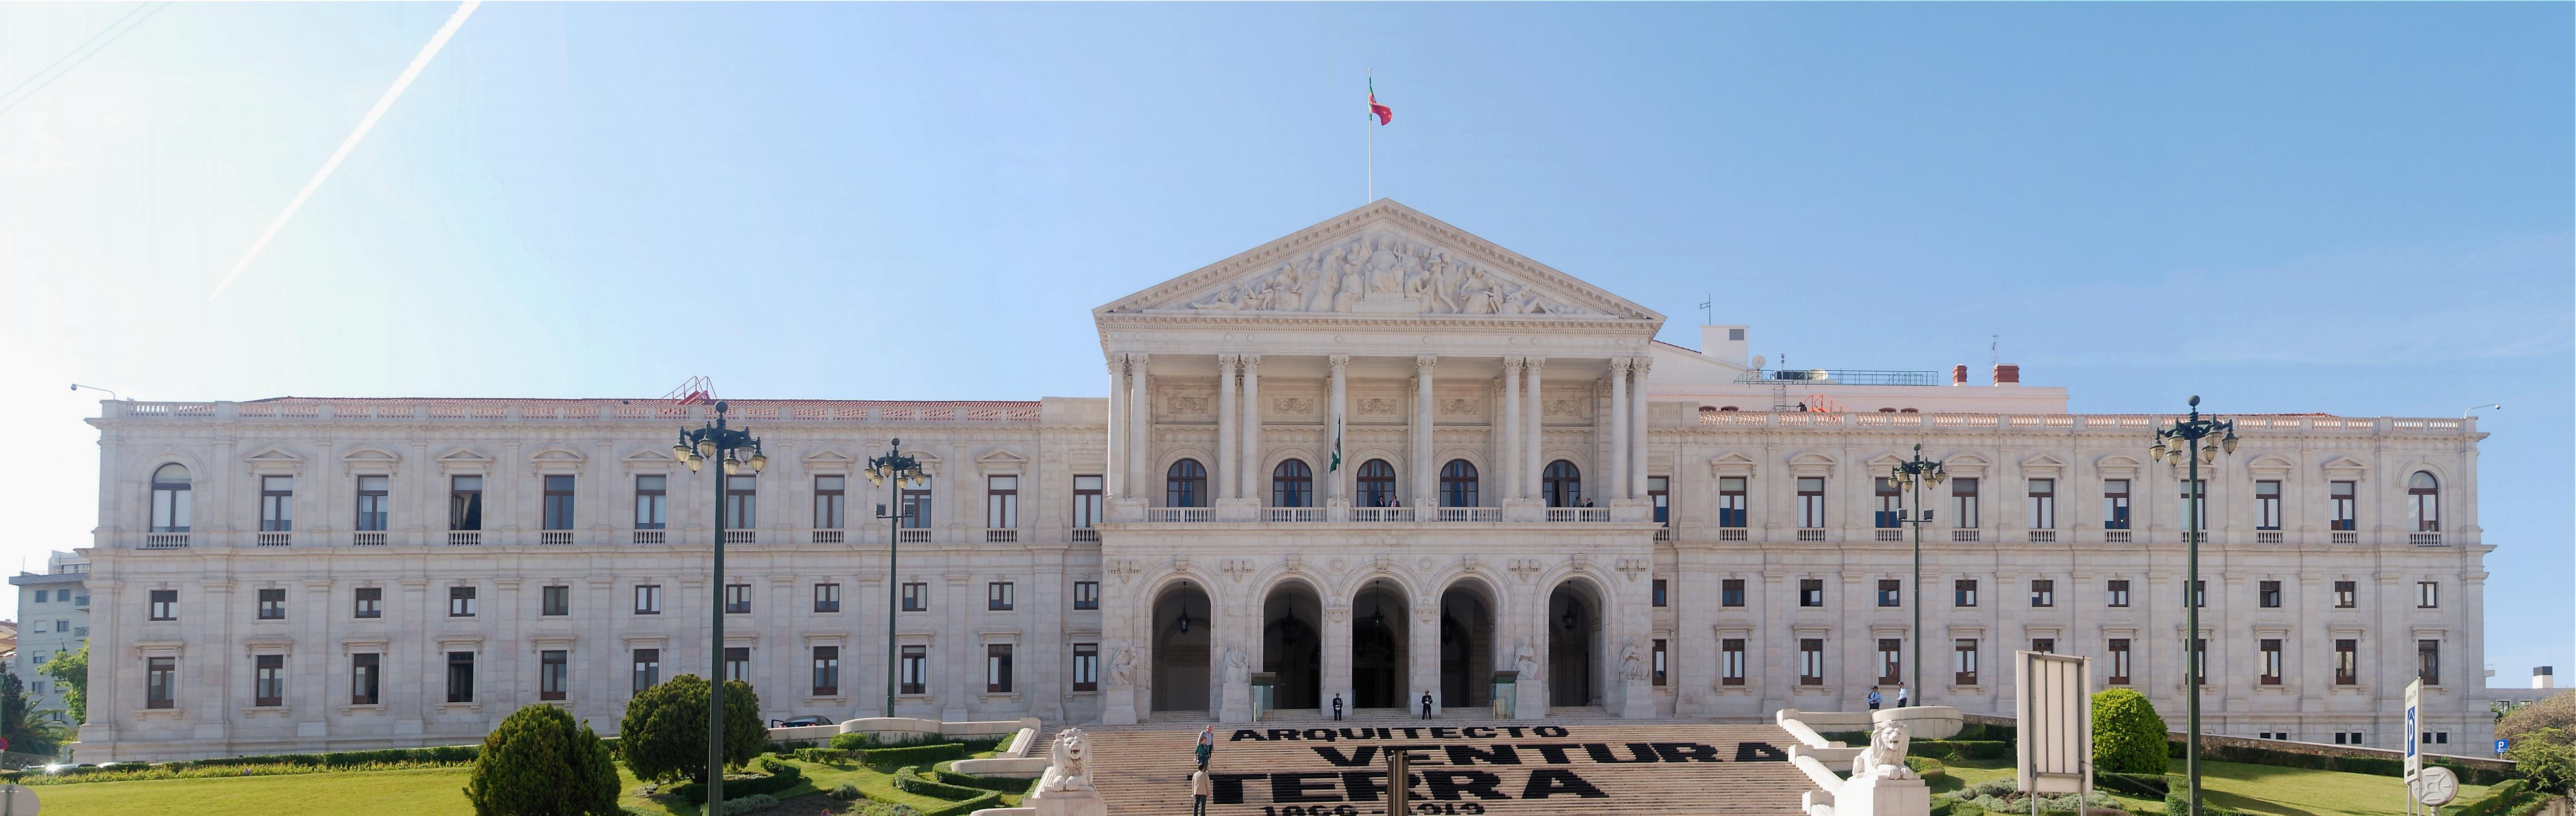 Здание Ассамблеи в Лиссабоне